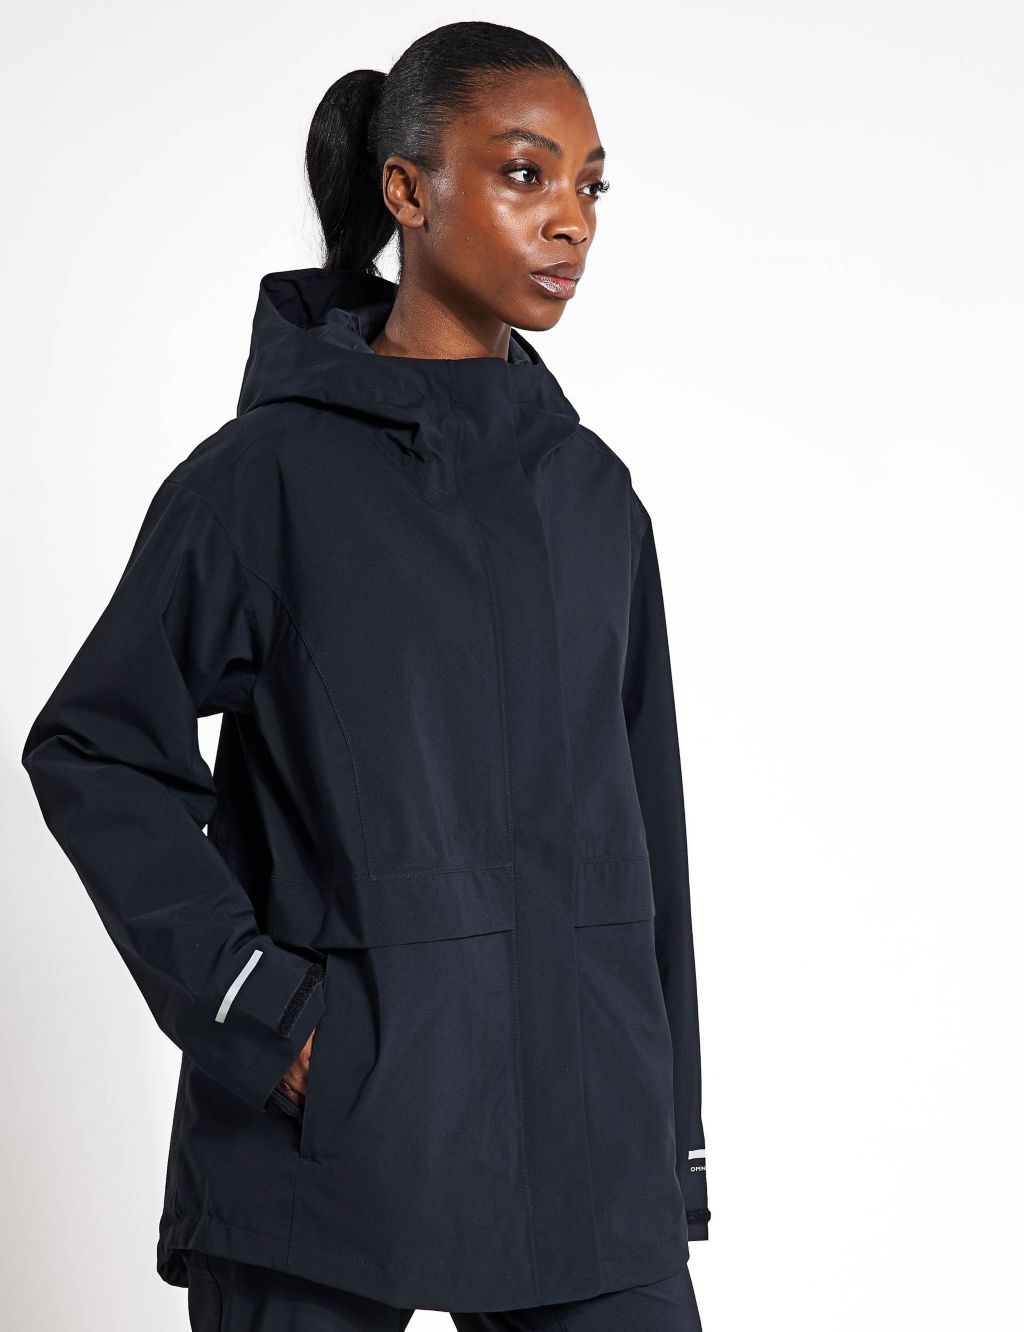 Altbound Waterproof Zip Up Hooded Jacket